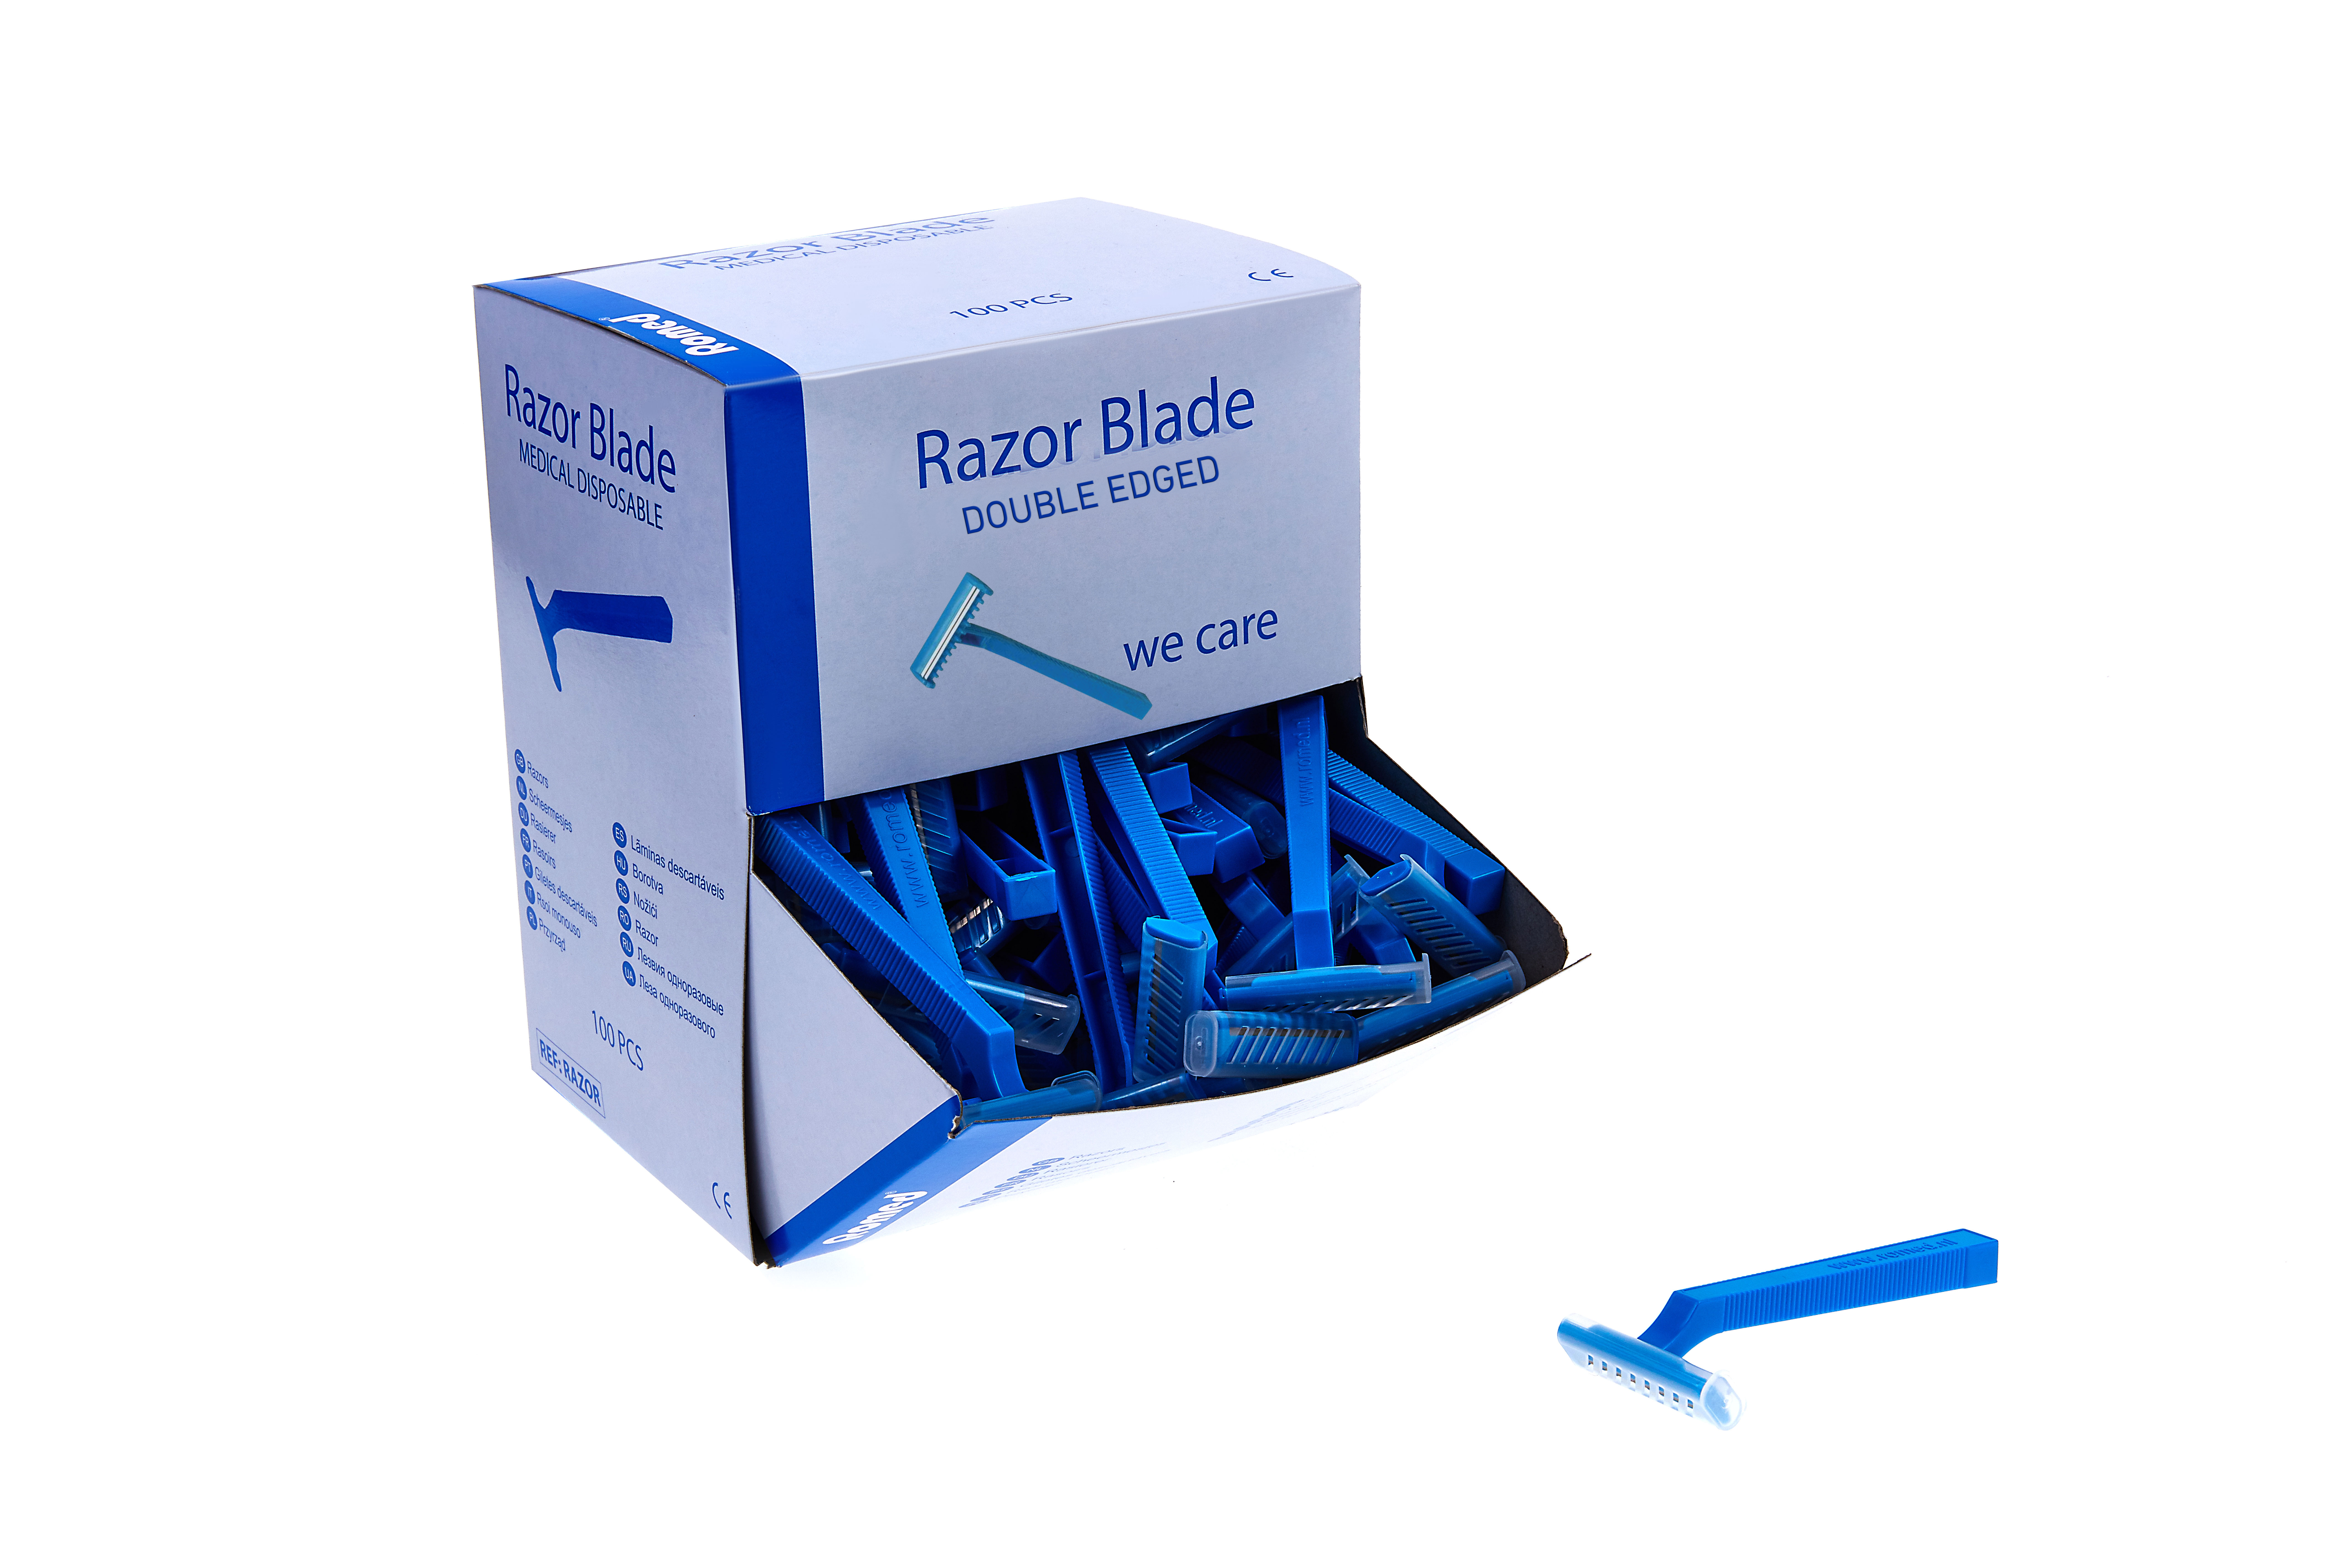 RAZORS-D Romed razors, disposable, stainless steel, double edged, non sterile, 100 pcs in a dispenser box, 12 x 100 pcs = 1200 pcs in a carton.